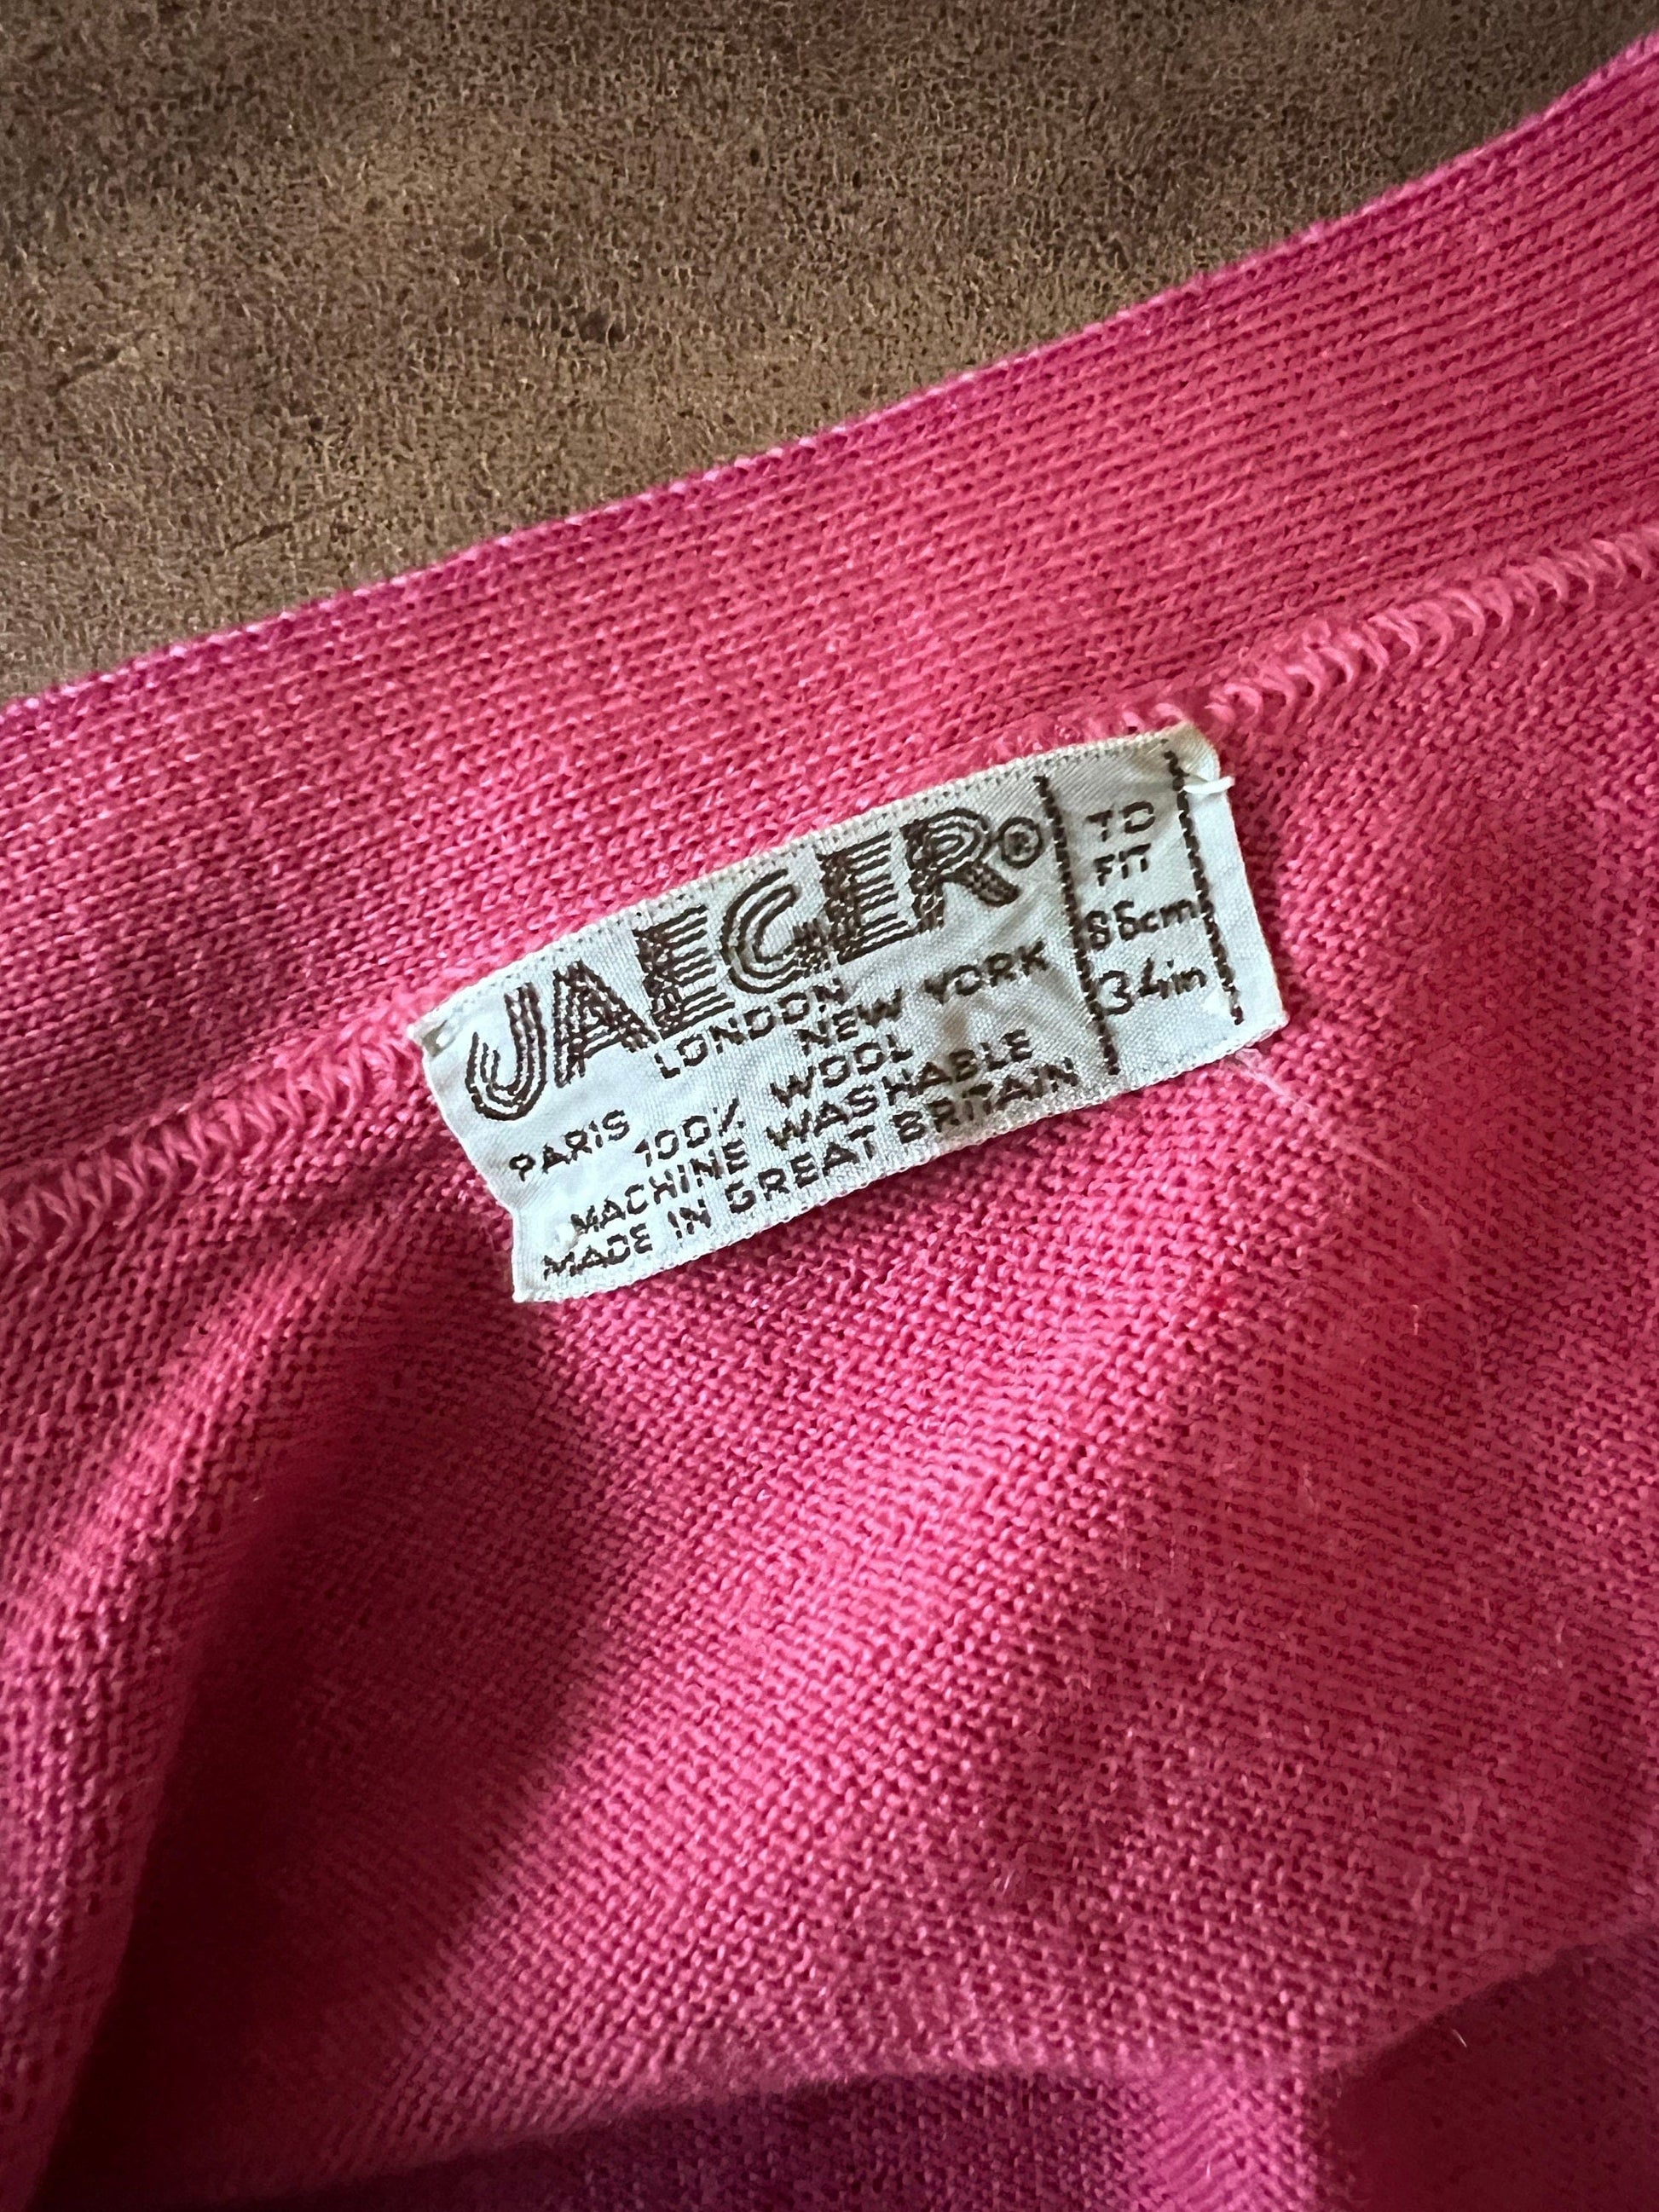 Vintage pink jaeger cardigan, pink cardigan, pink vintage knitwear, vintage cardigan, vintage cardi, 1980s, vintage knitwear, jaeger